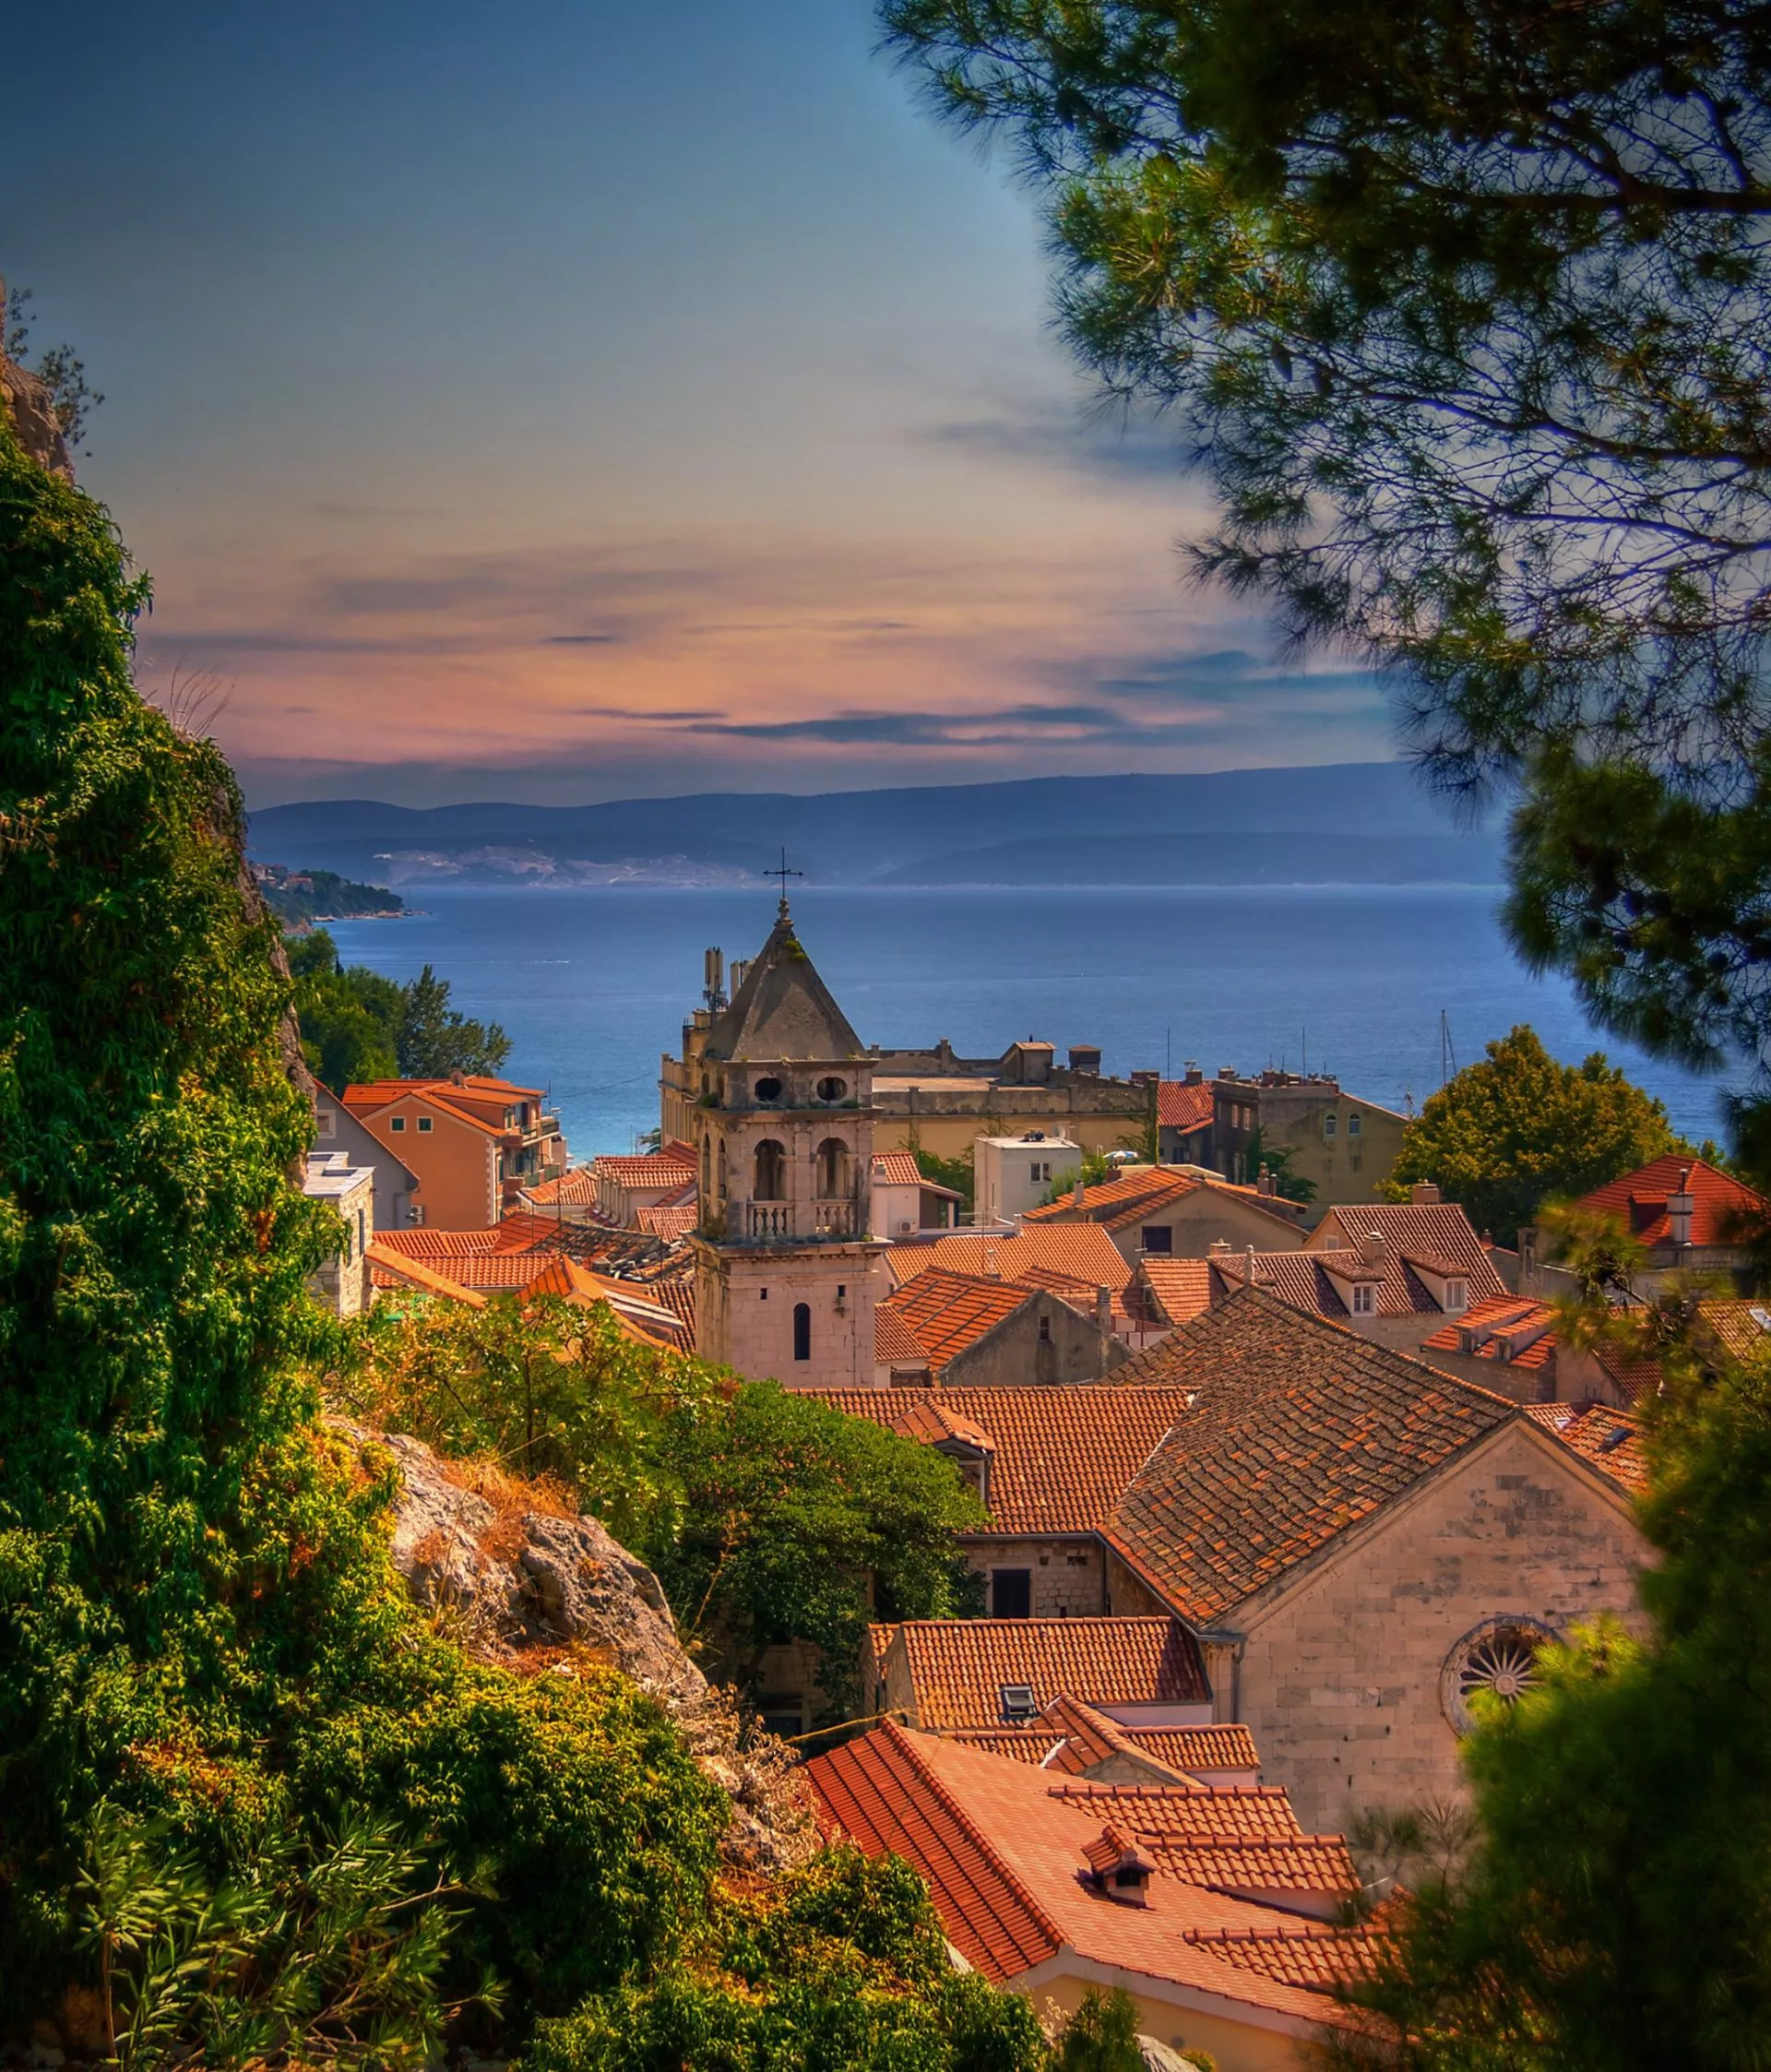 Overlooking the Mediterranean town Omis, Dalmatia, Croatia. Blick auf die mediterane Kleinstadt Omis, Dalmatien, Kroatien.